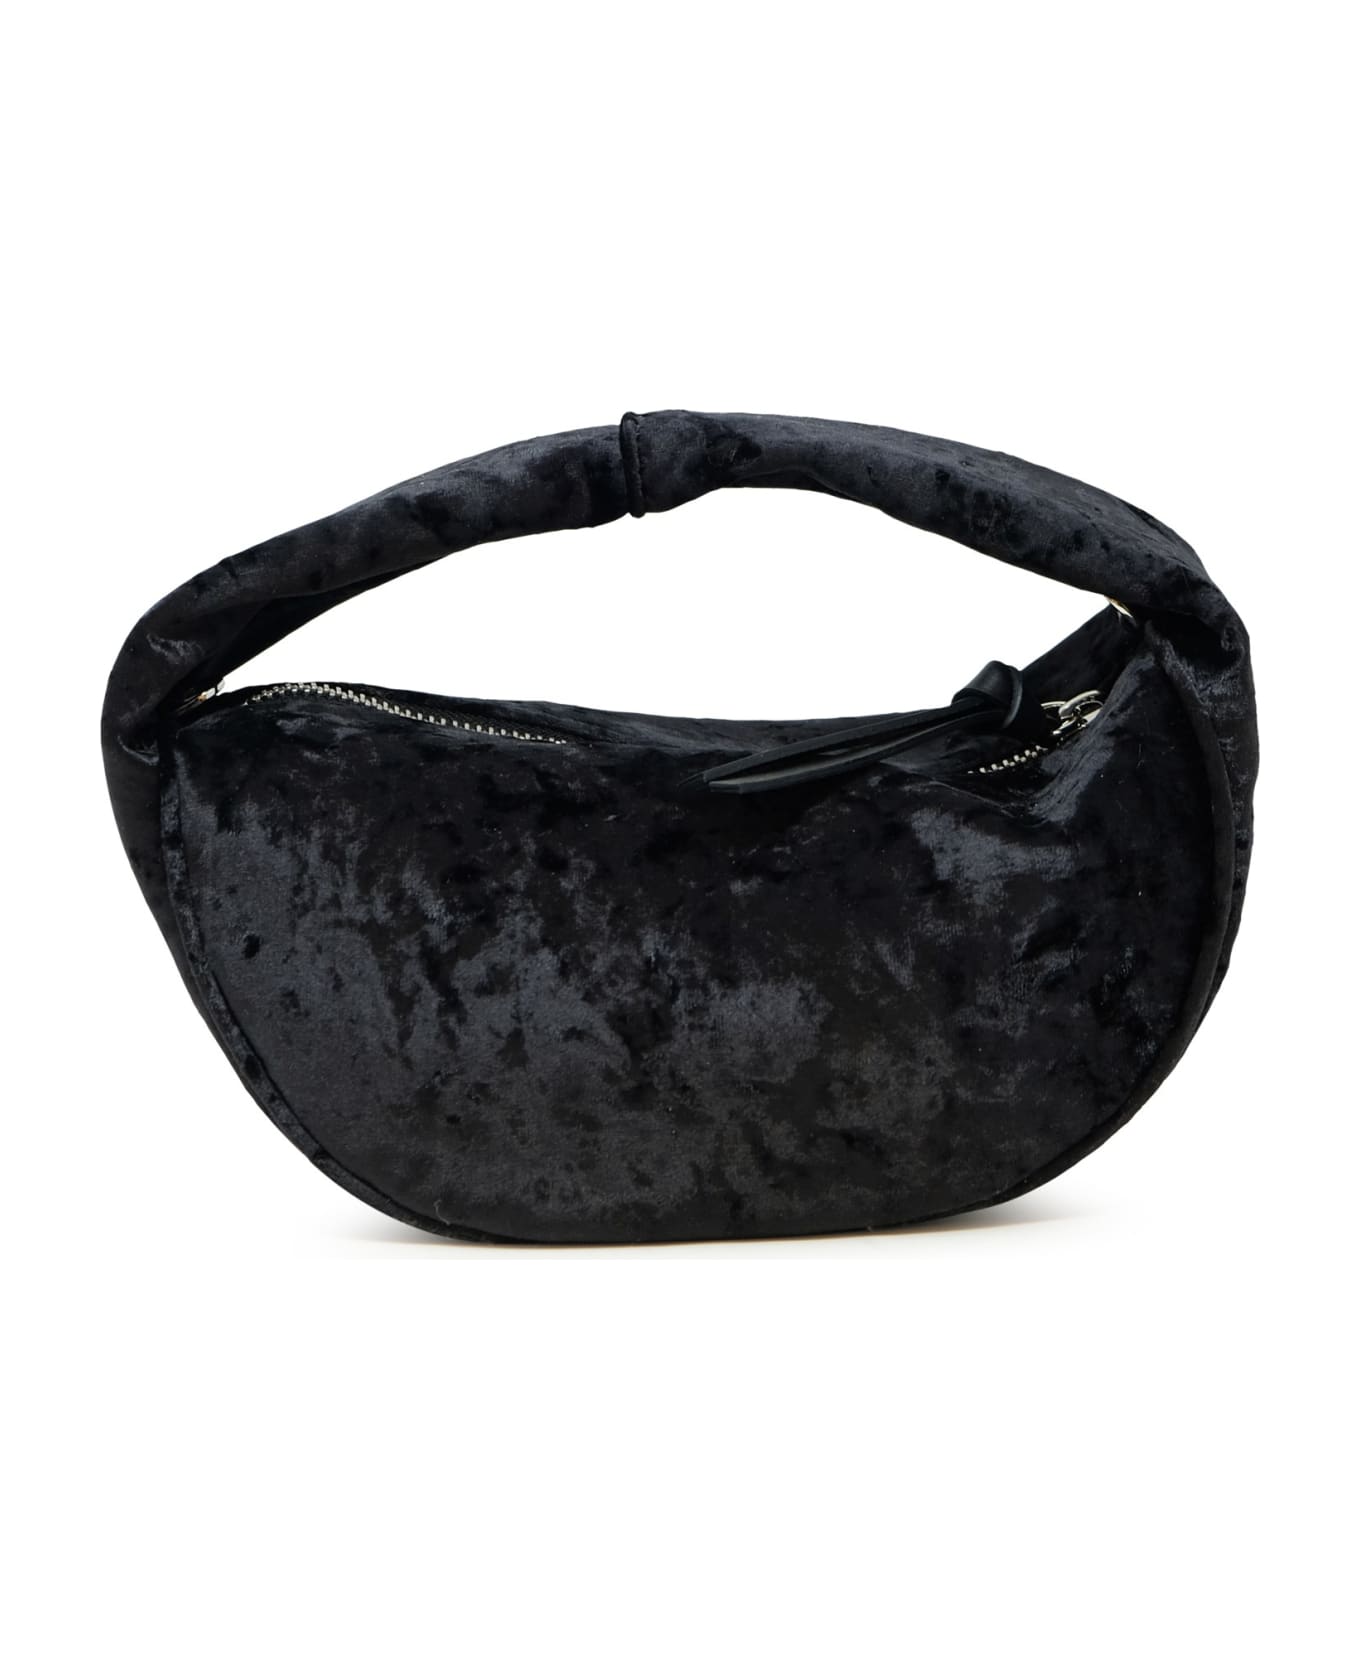 BY FAR Baby Cush Black Crushed Velvet Handbag